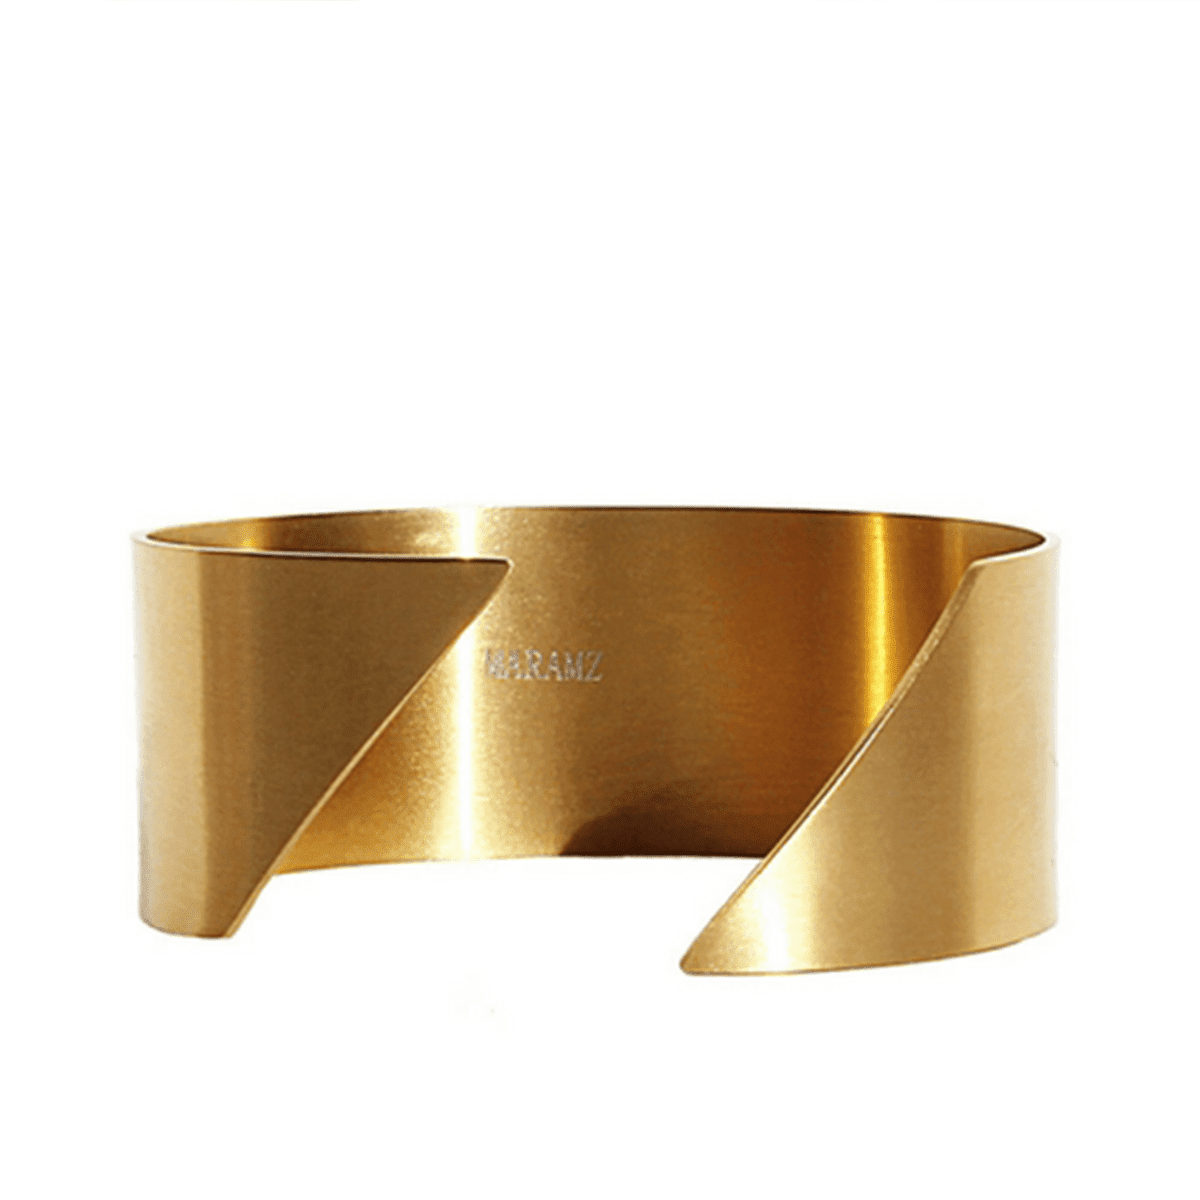 Buy Palmonas 18K Gold Plated Cuff Bracelet Bangle for Women Online